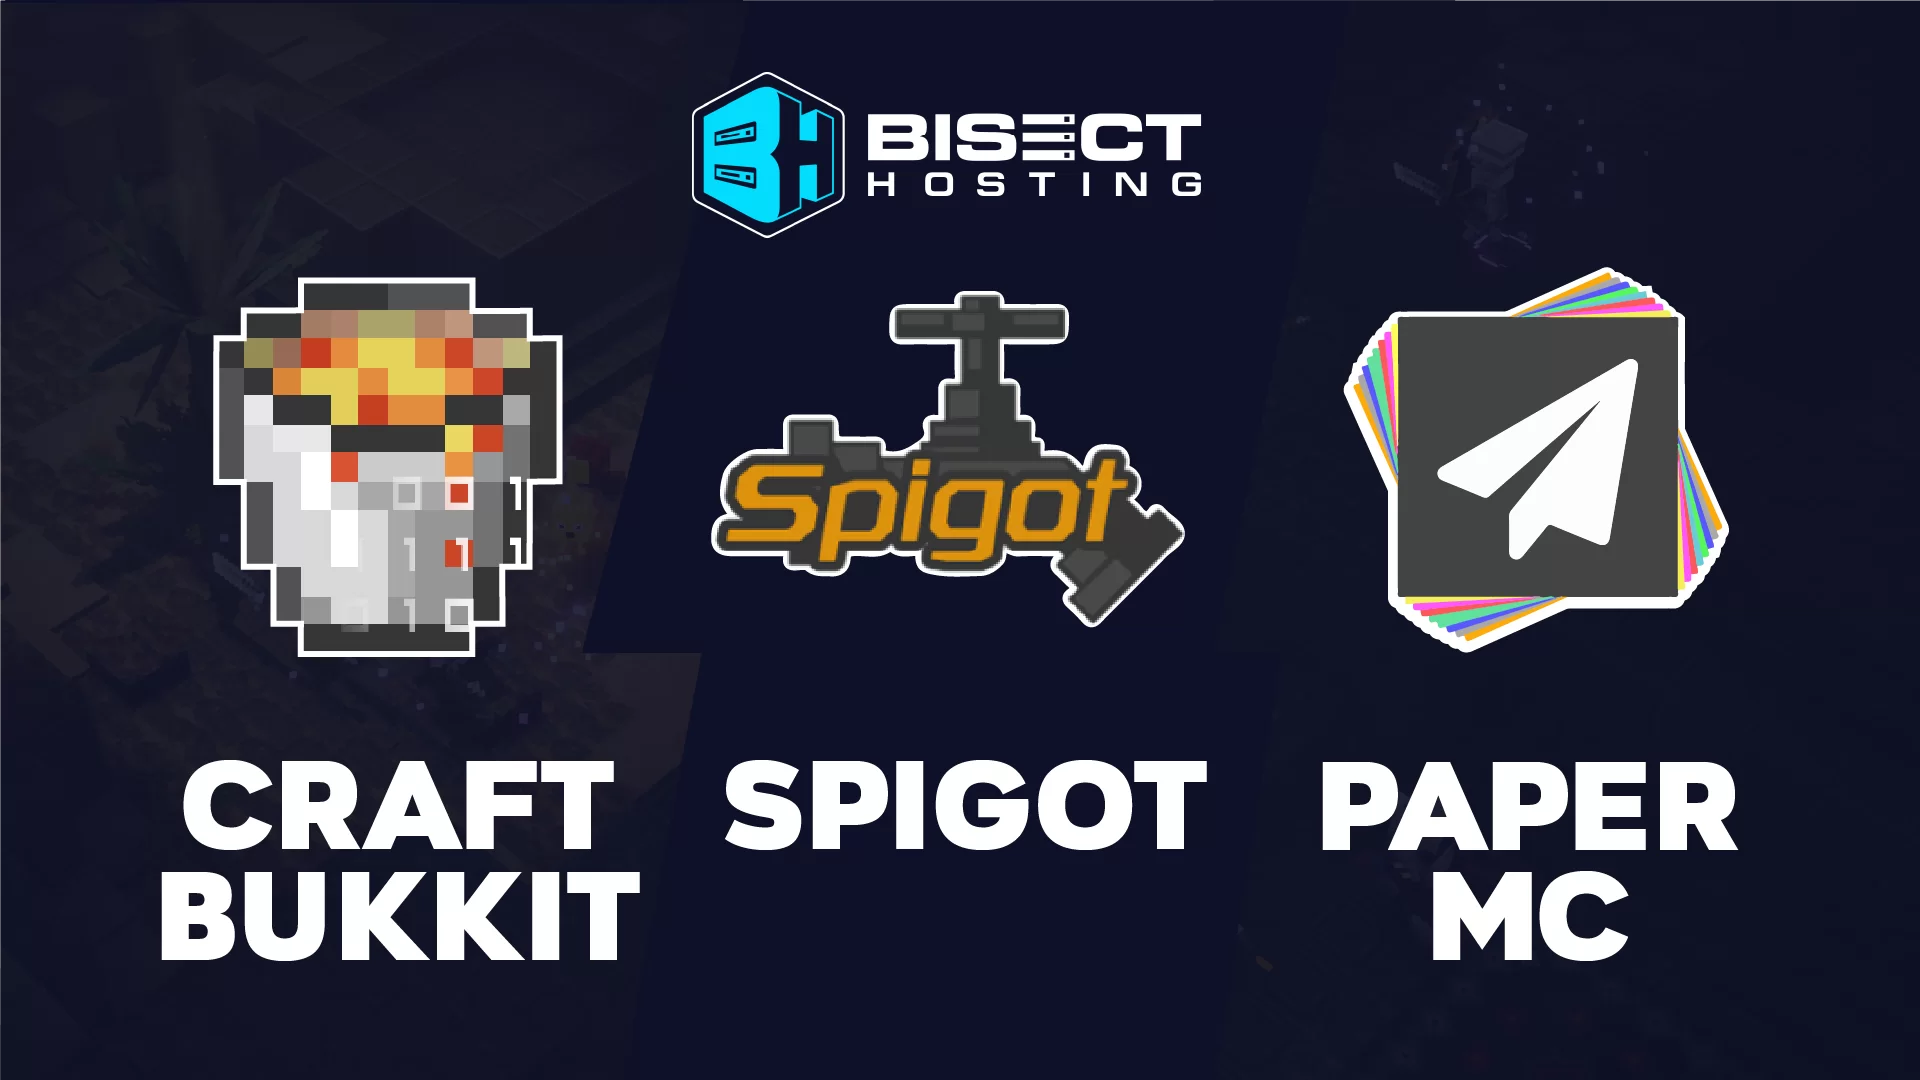 CraftBukkit vs Spigot vs Paper